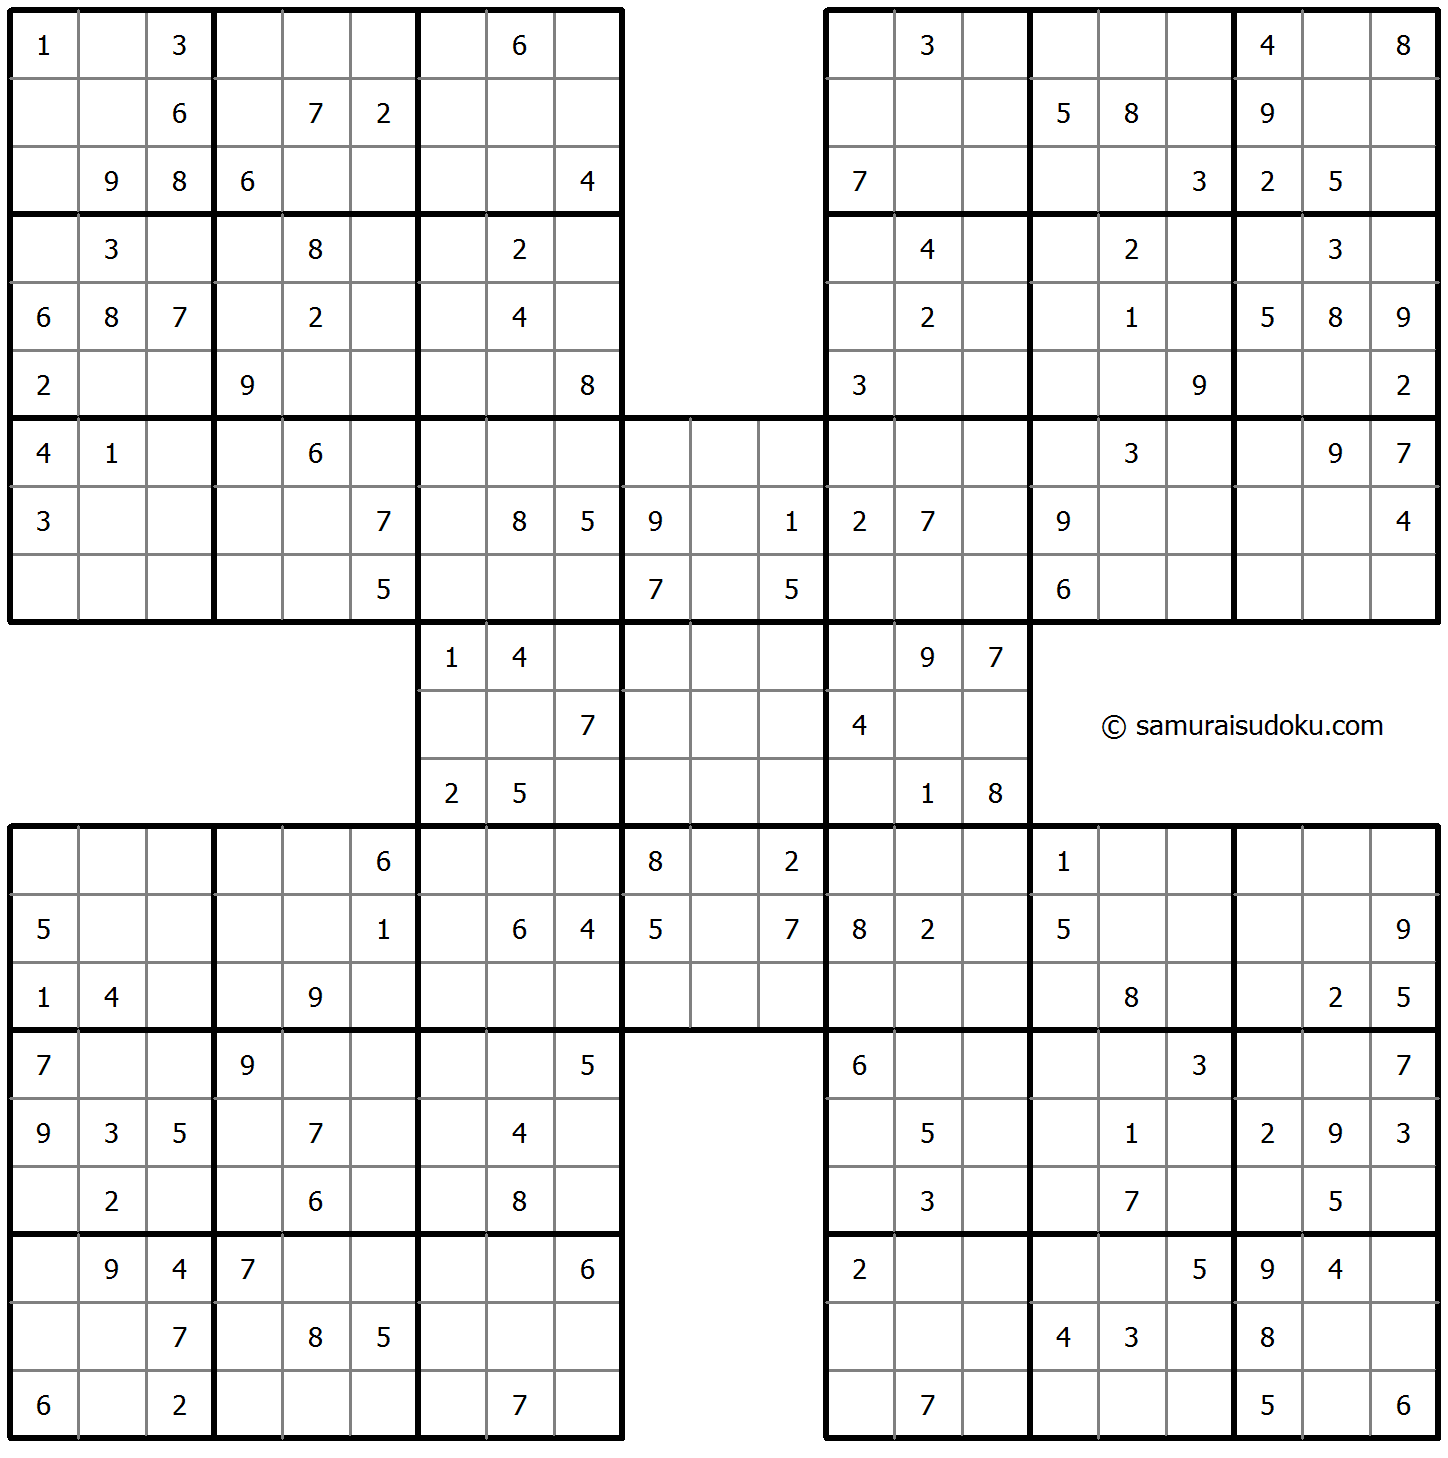 Samurai Sudoku 9-March-2022